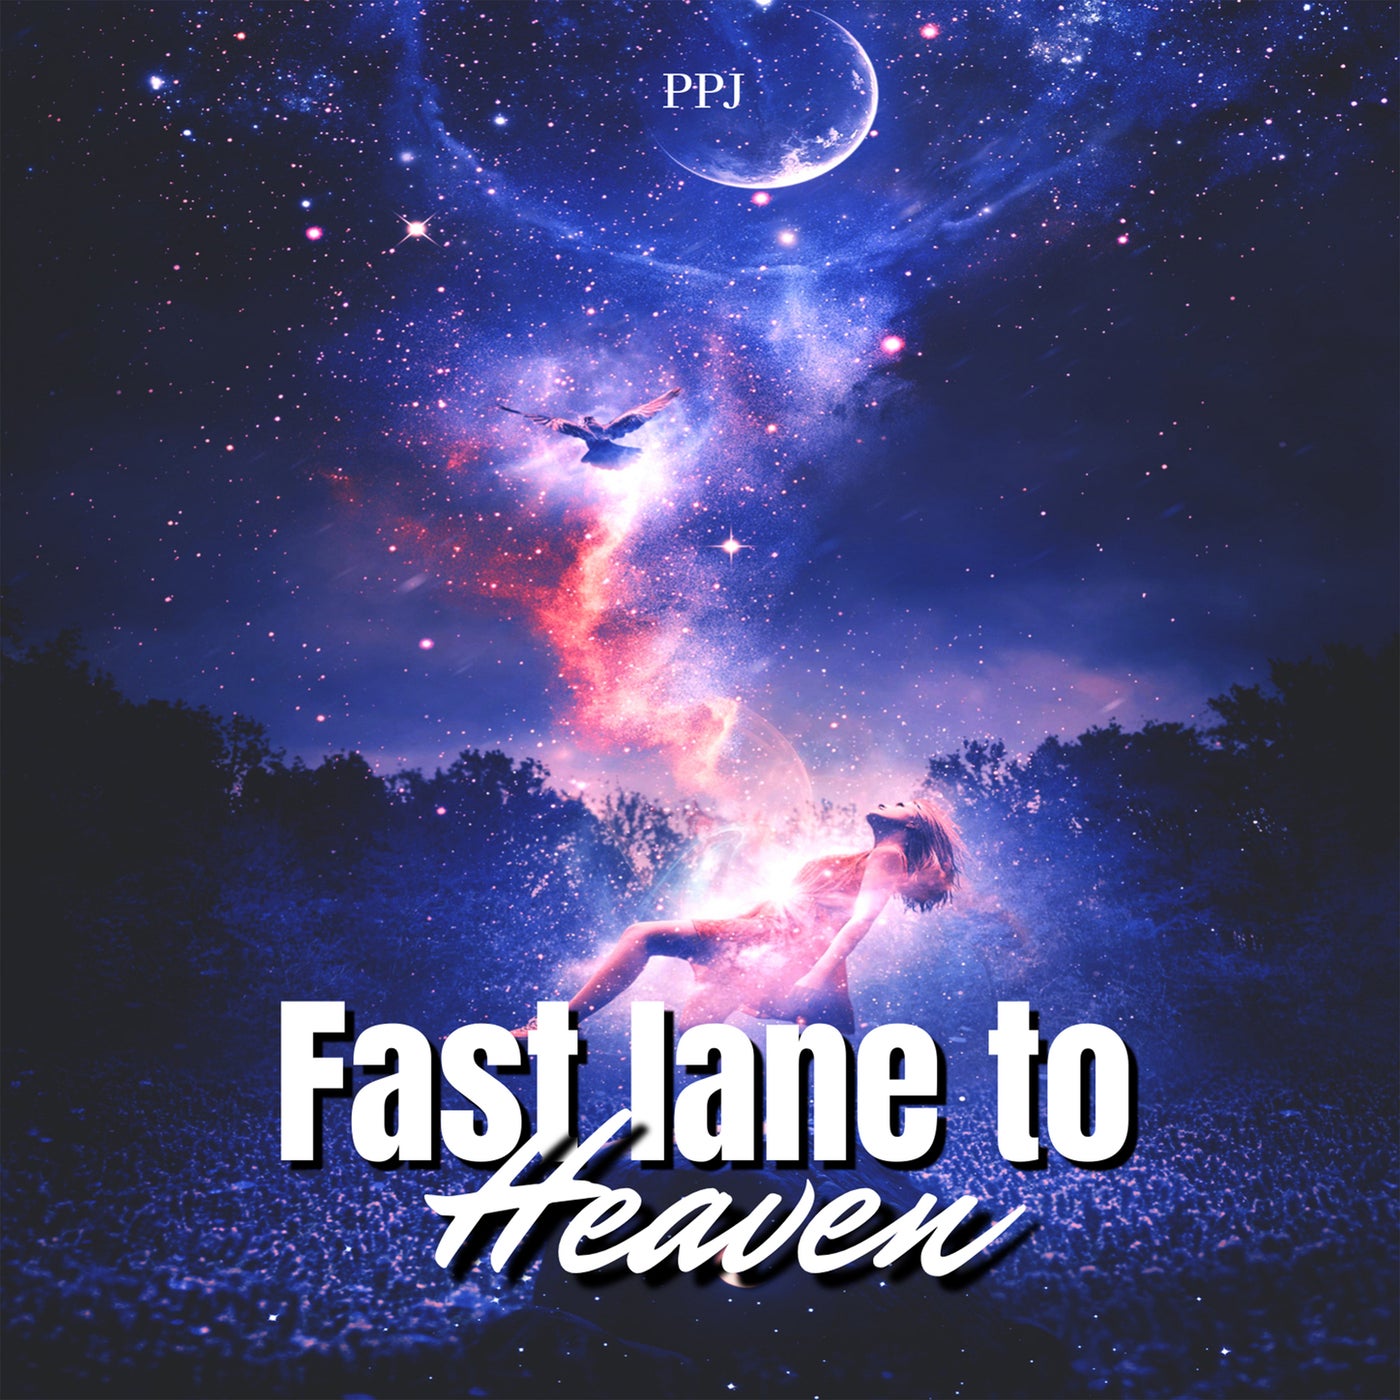 Fastlane to Heaven